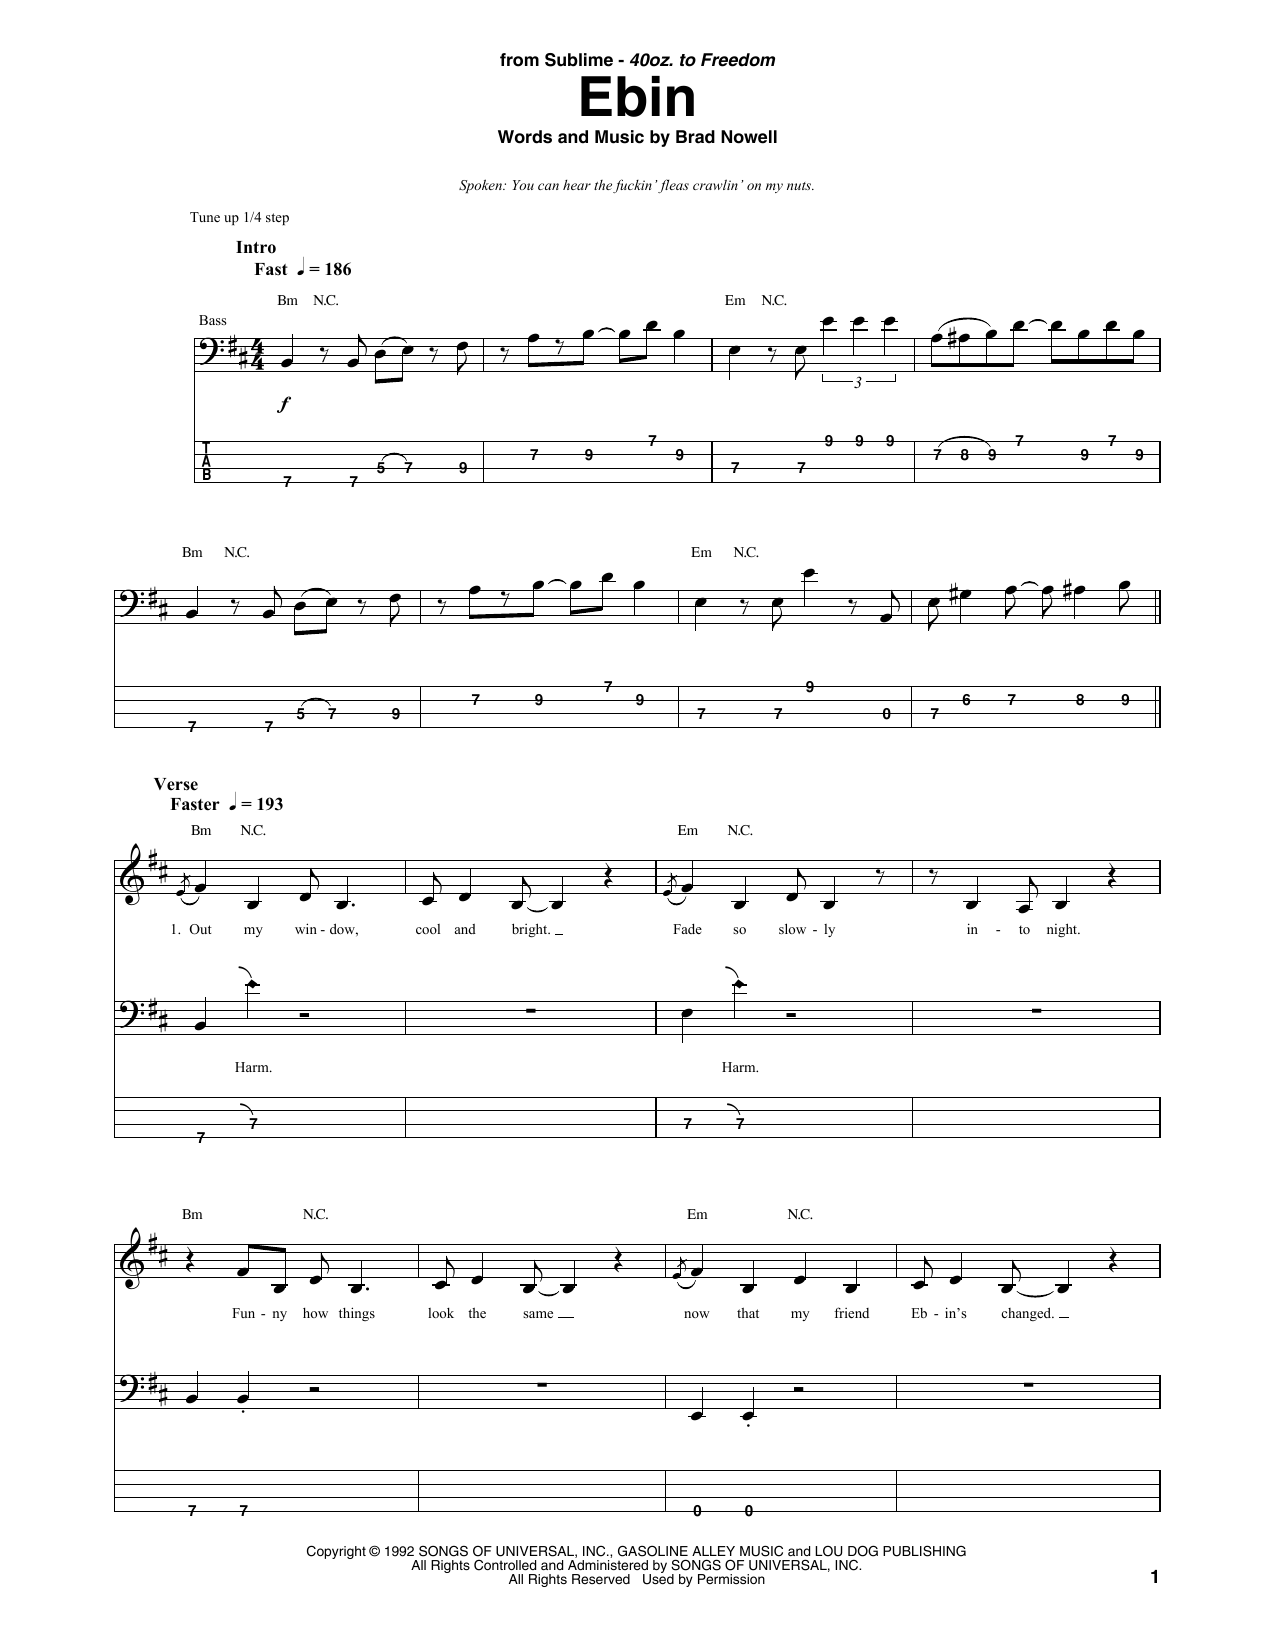 Sublime Ebin Sheet Music Notes & Chords for Guitar Tab (Single Guitar) - Download or Print PDF